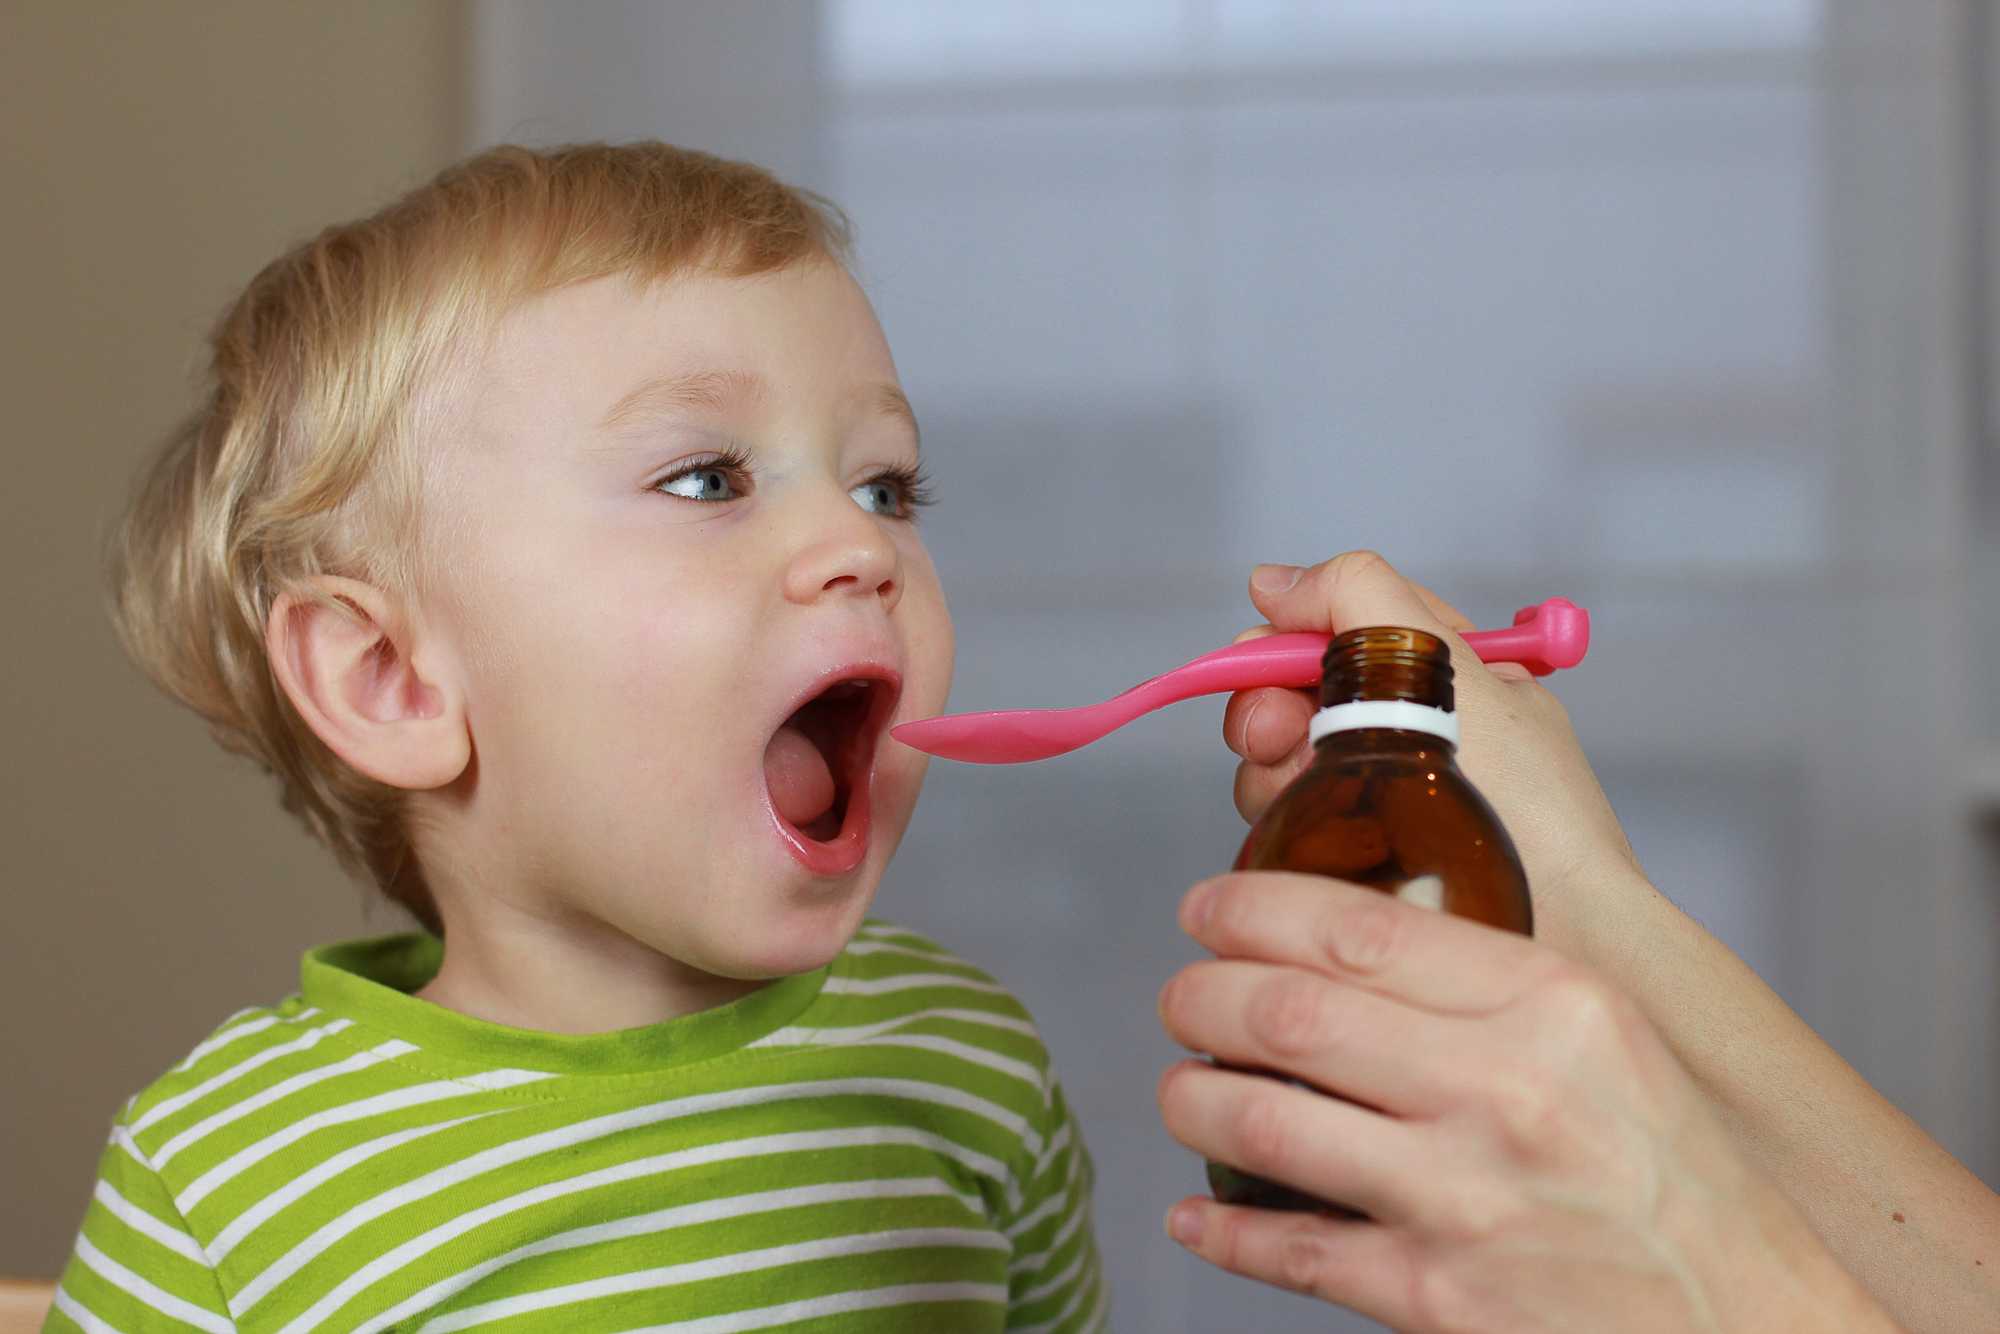 Child taking medicine